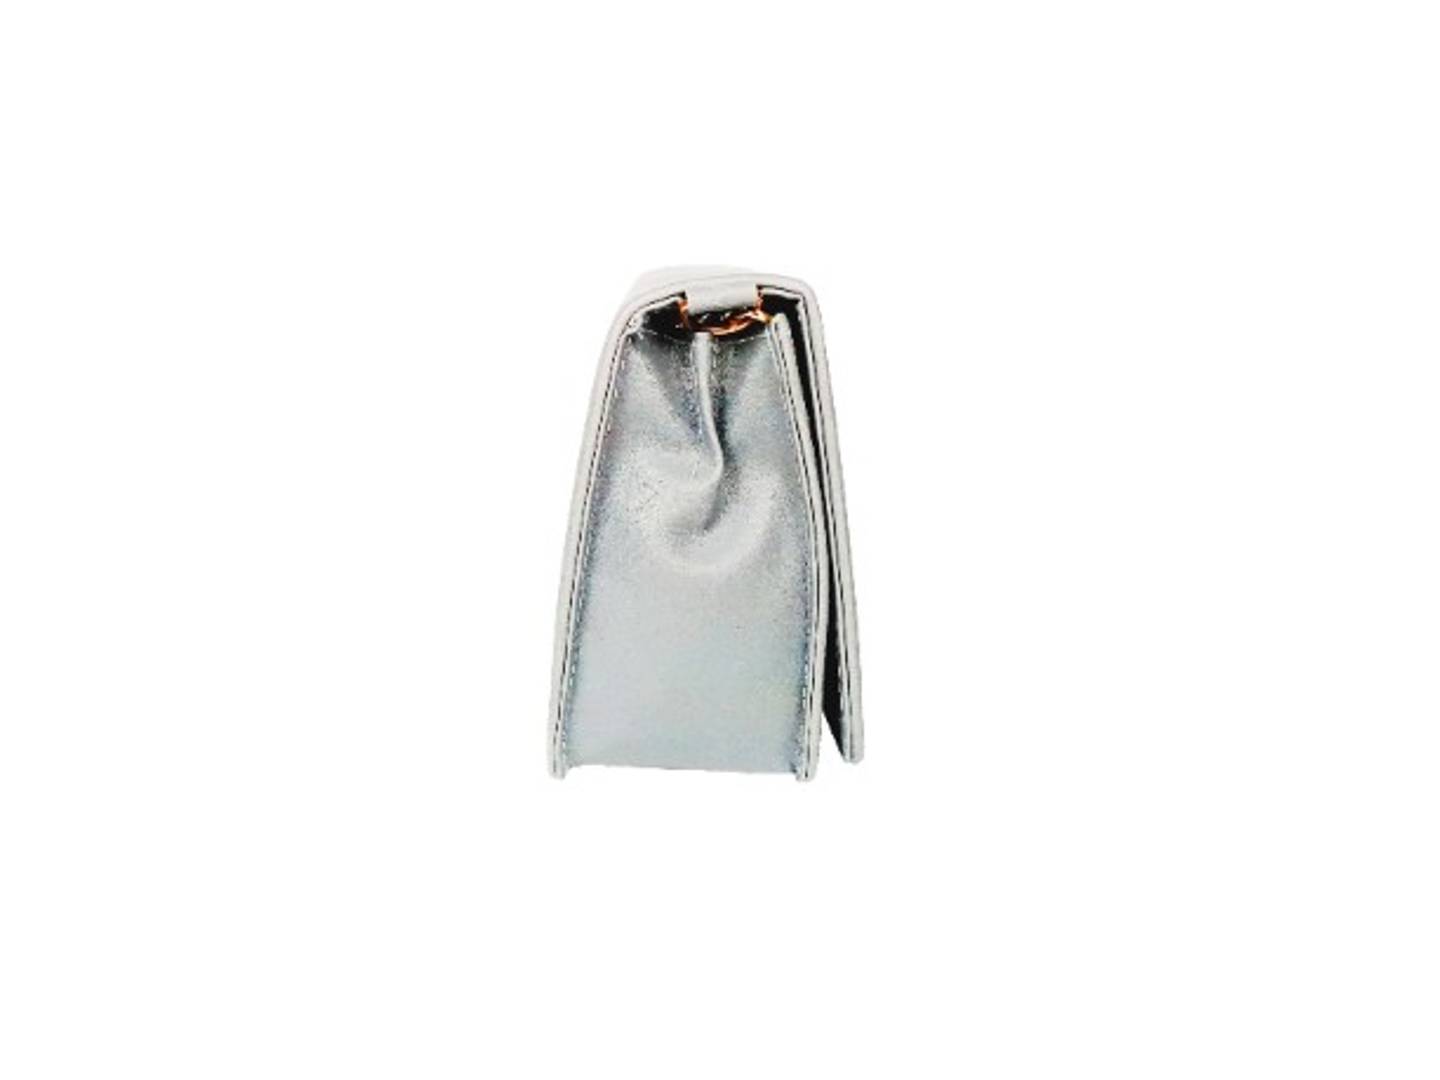 Womens sling bag with adjustable belt - Sling bag for girls | handbags | Ladies purse